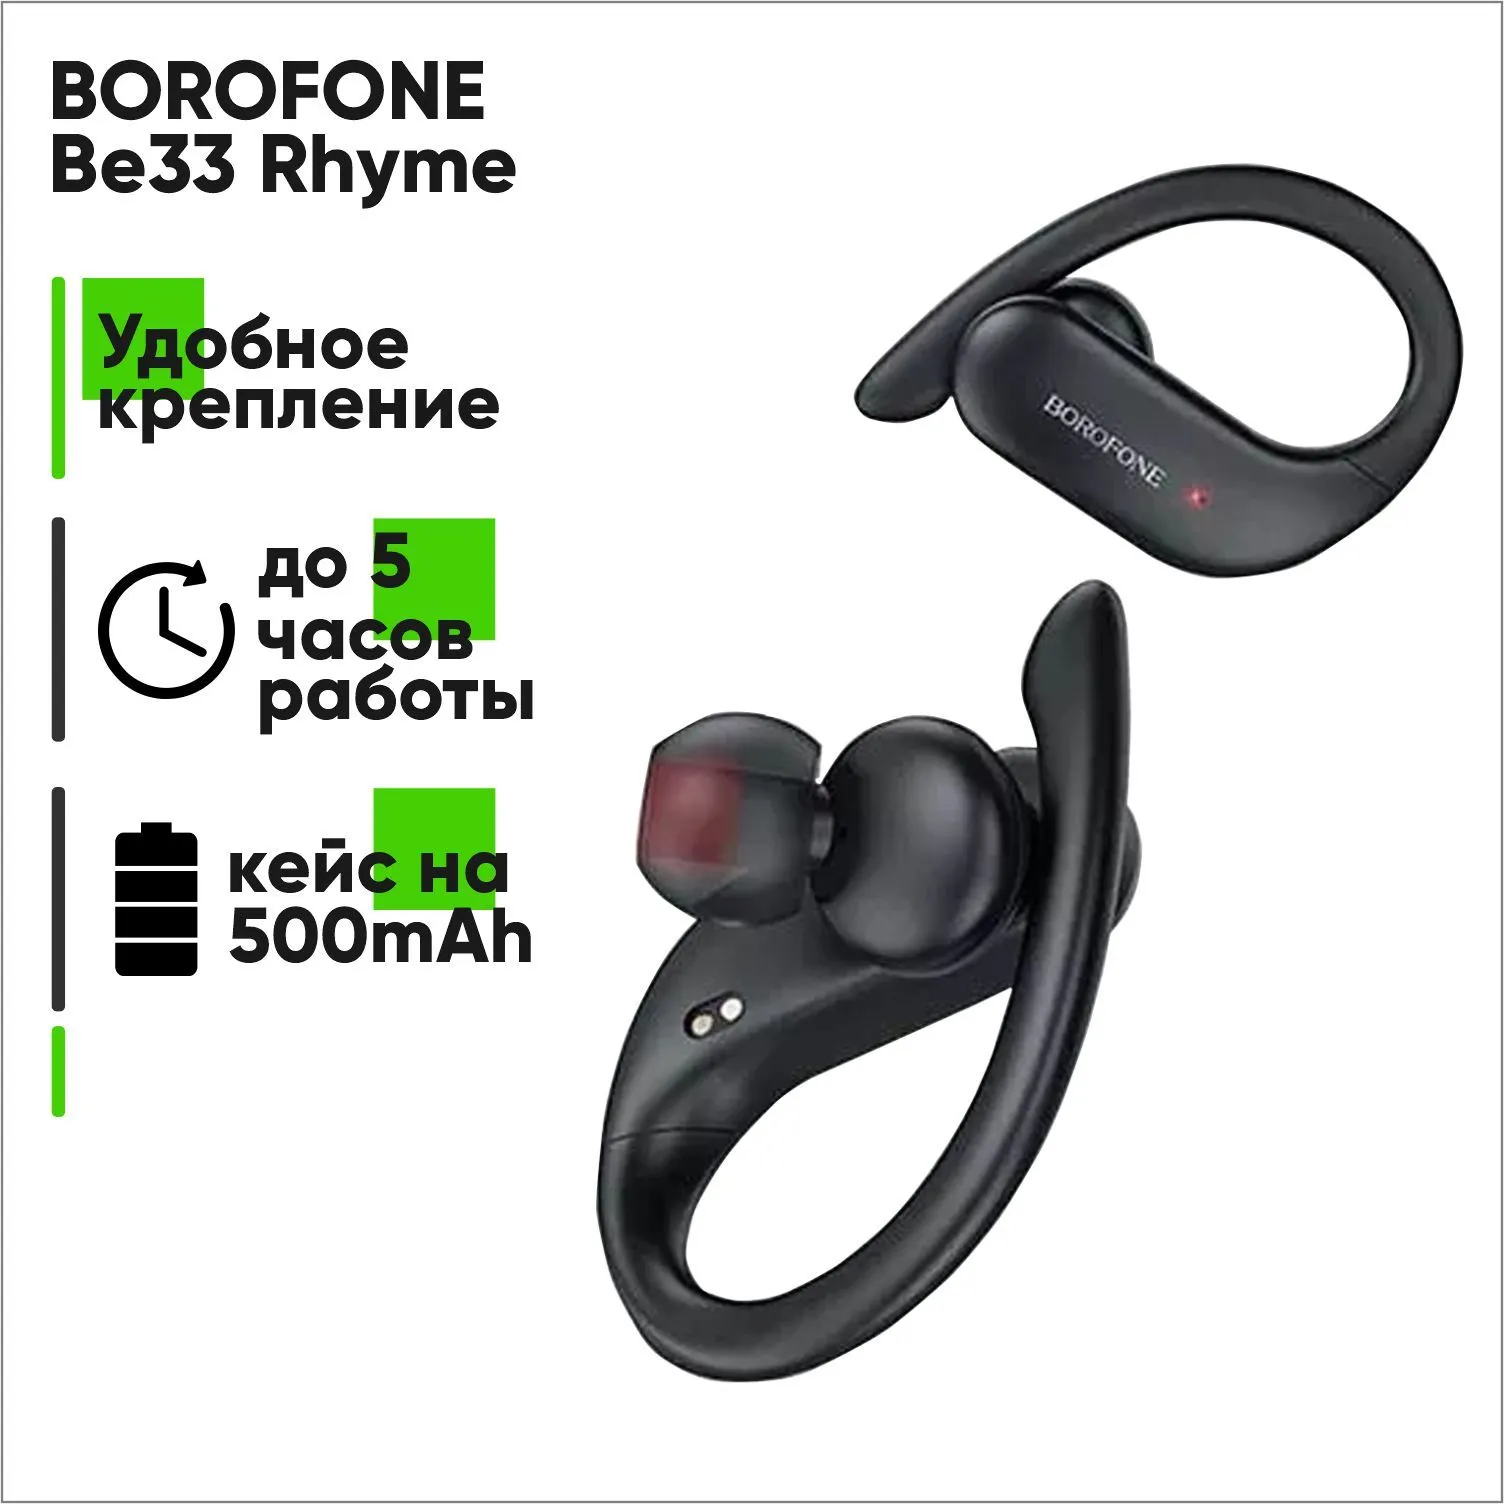 Беспроводная гарнитура Bluetooth BOROFONE BE33 Rhyme TWS wireless headset (черный)